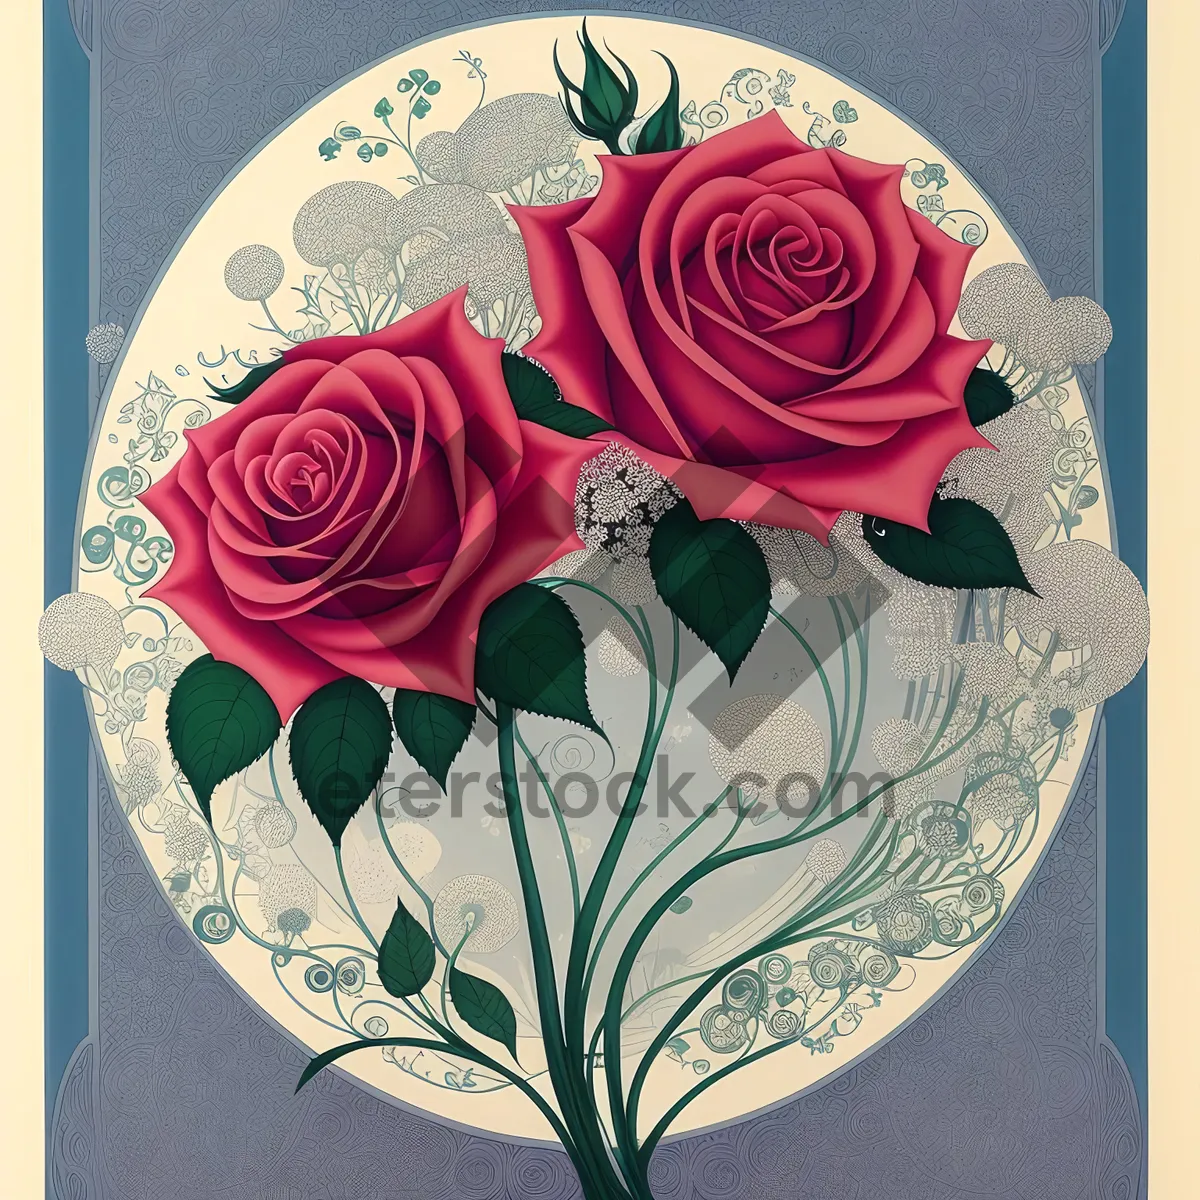 Picture of Vintage Floral Wallpaper with Ornate Rose Stamp Design